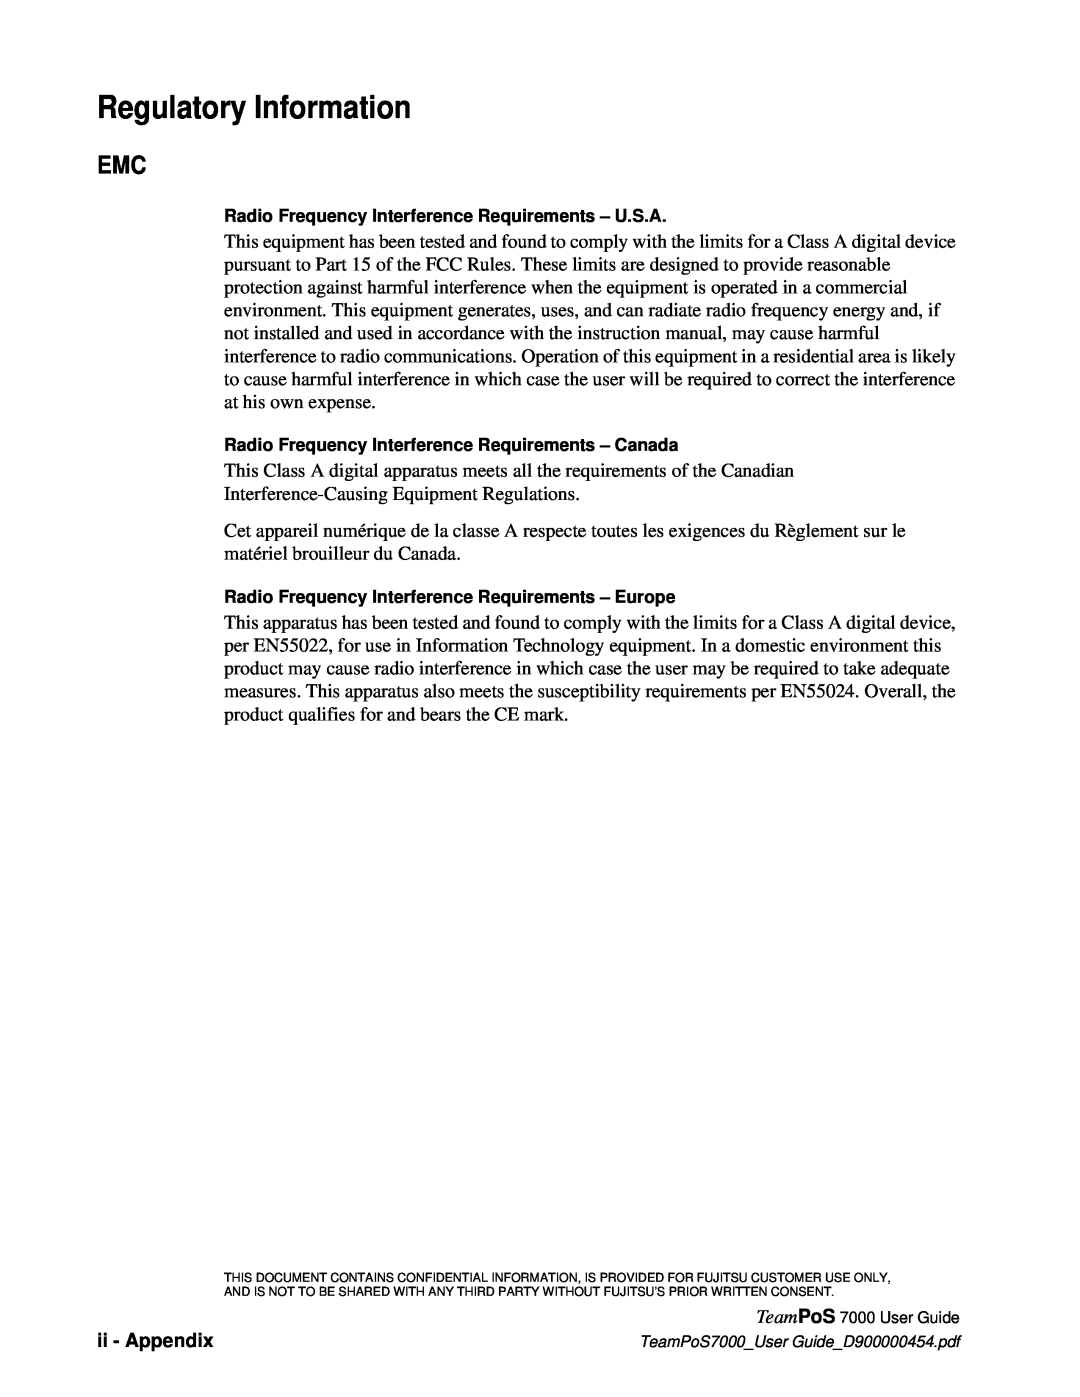 Fujitsu 7000 manual Regulatory Information, ii - Appendix 